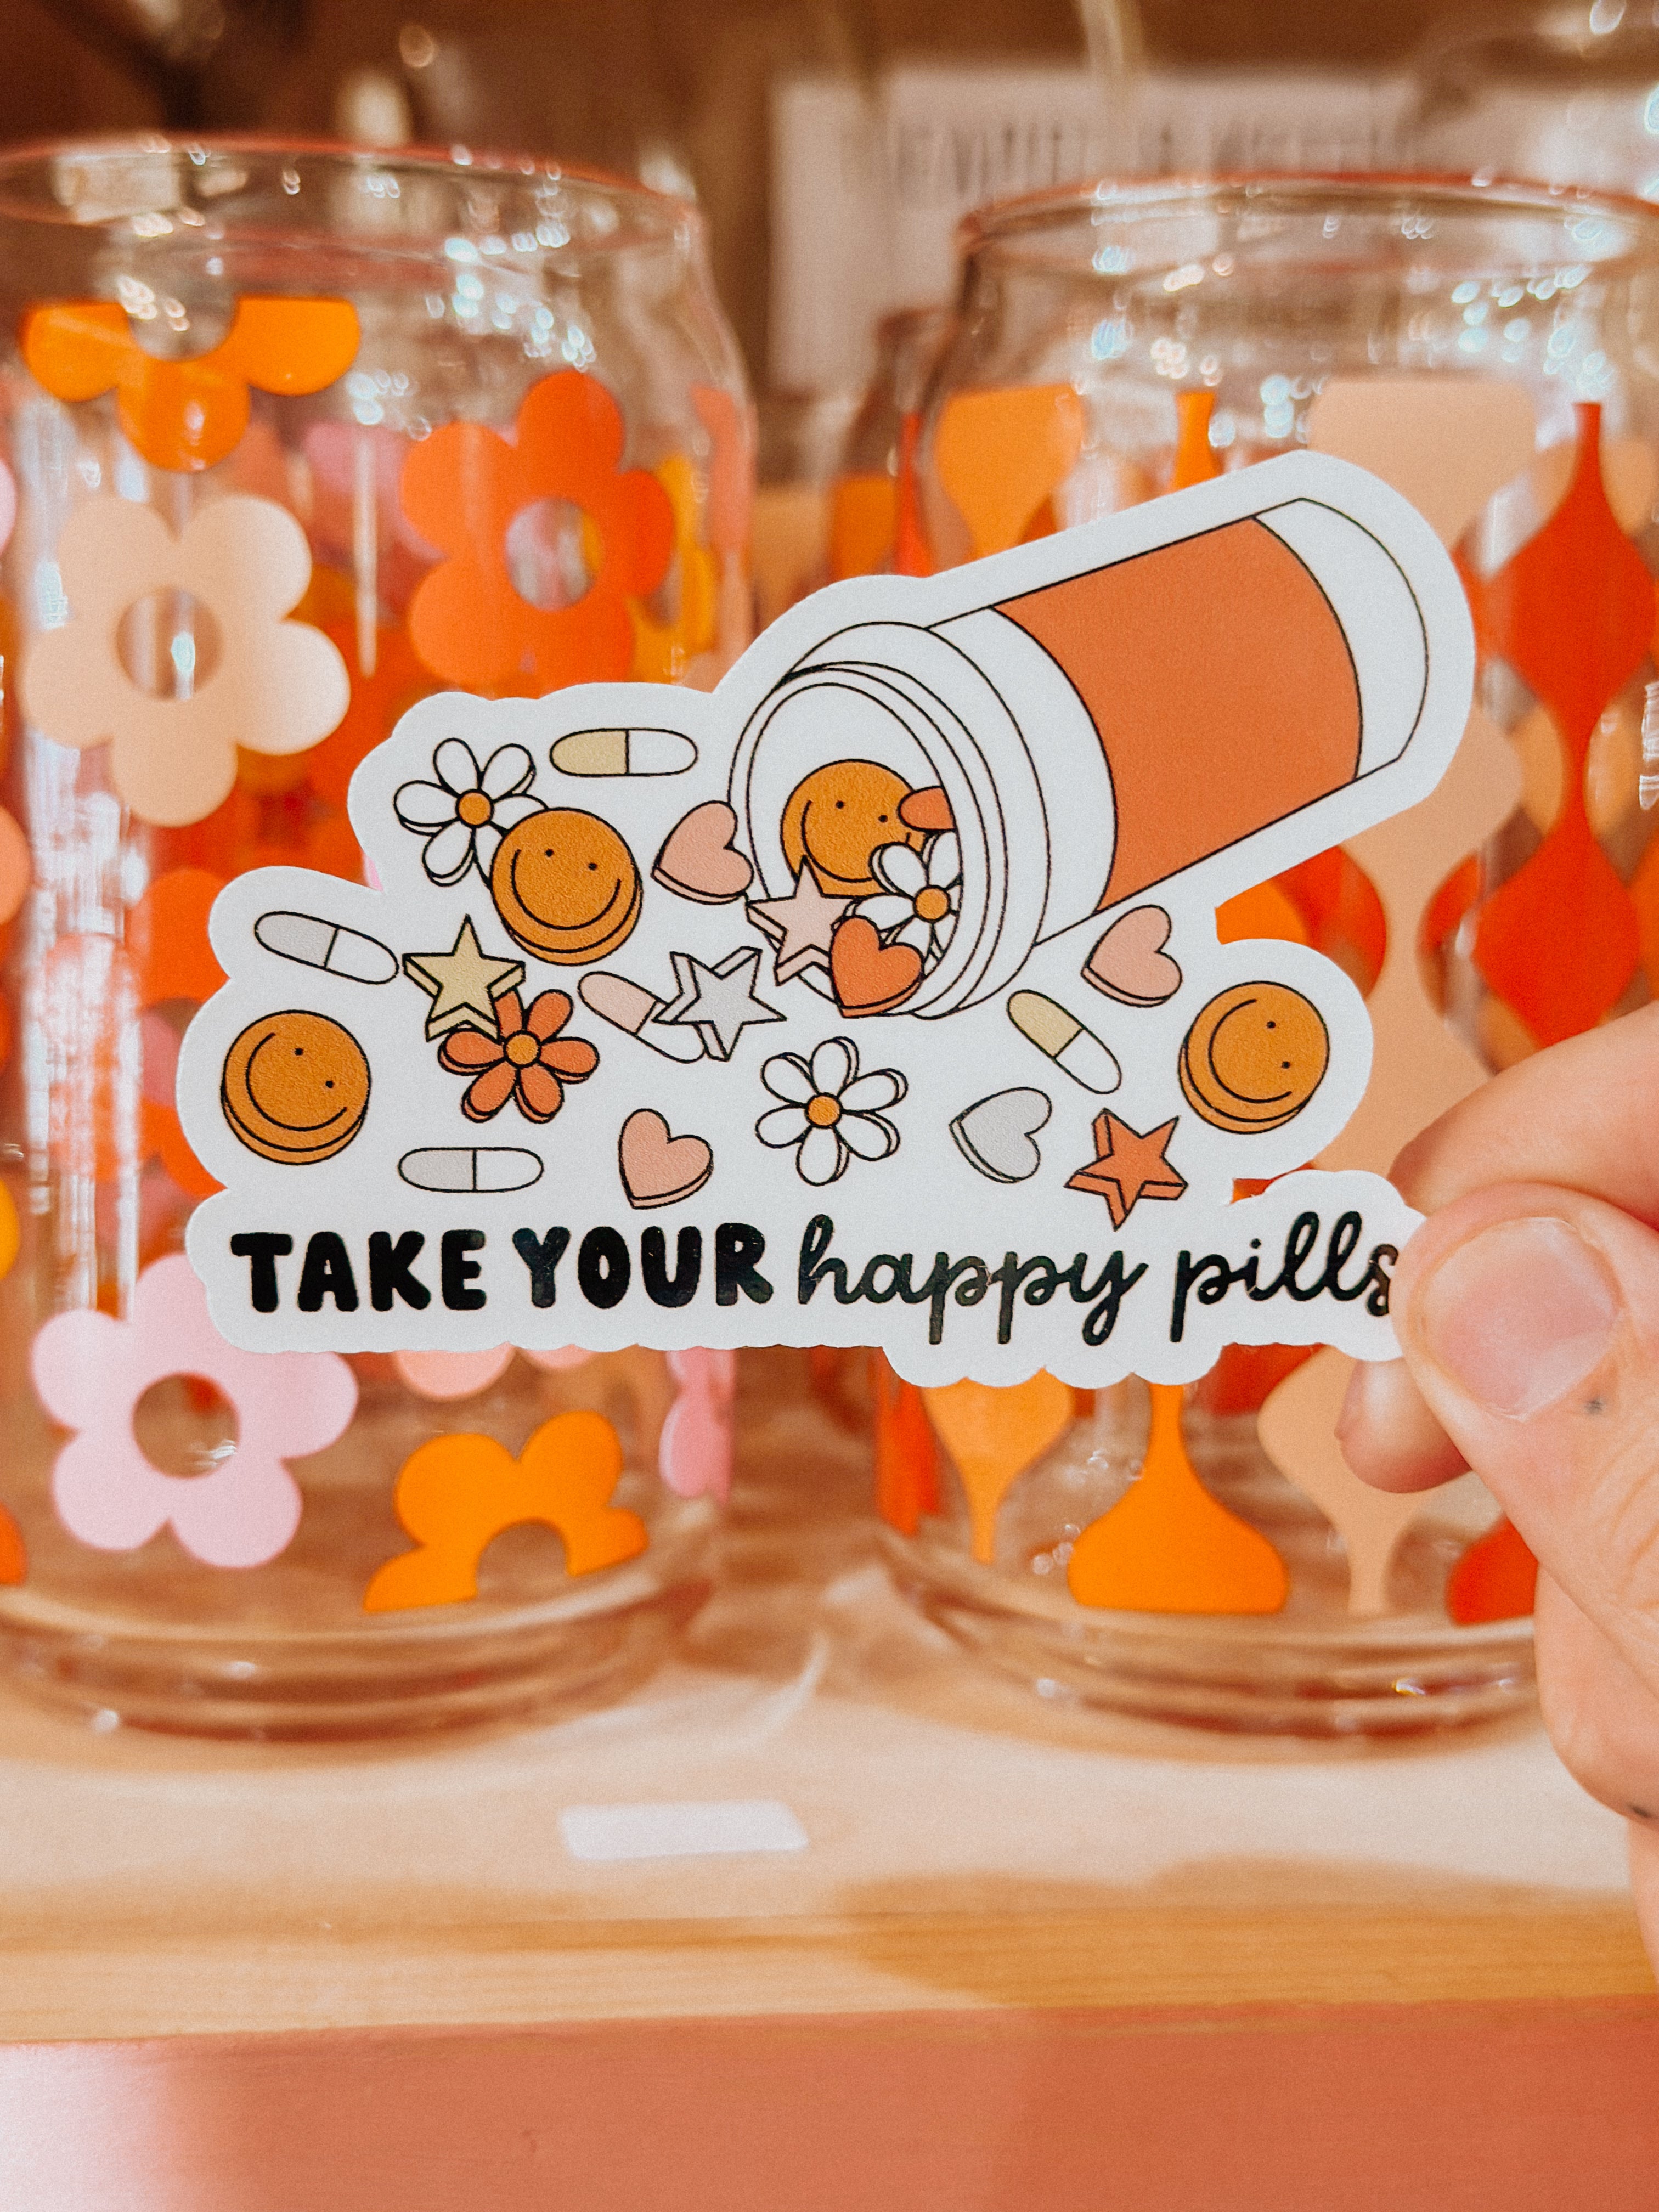 “Take your happy pills” Vinyl sticker